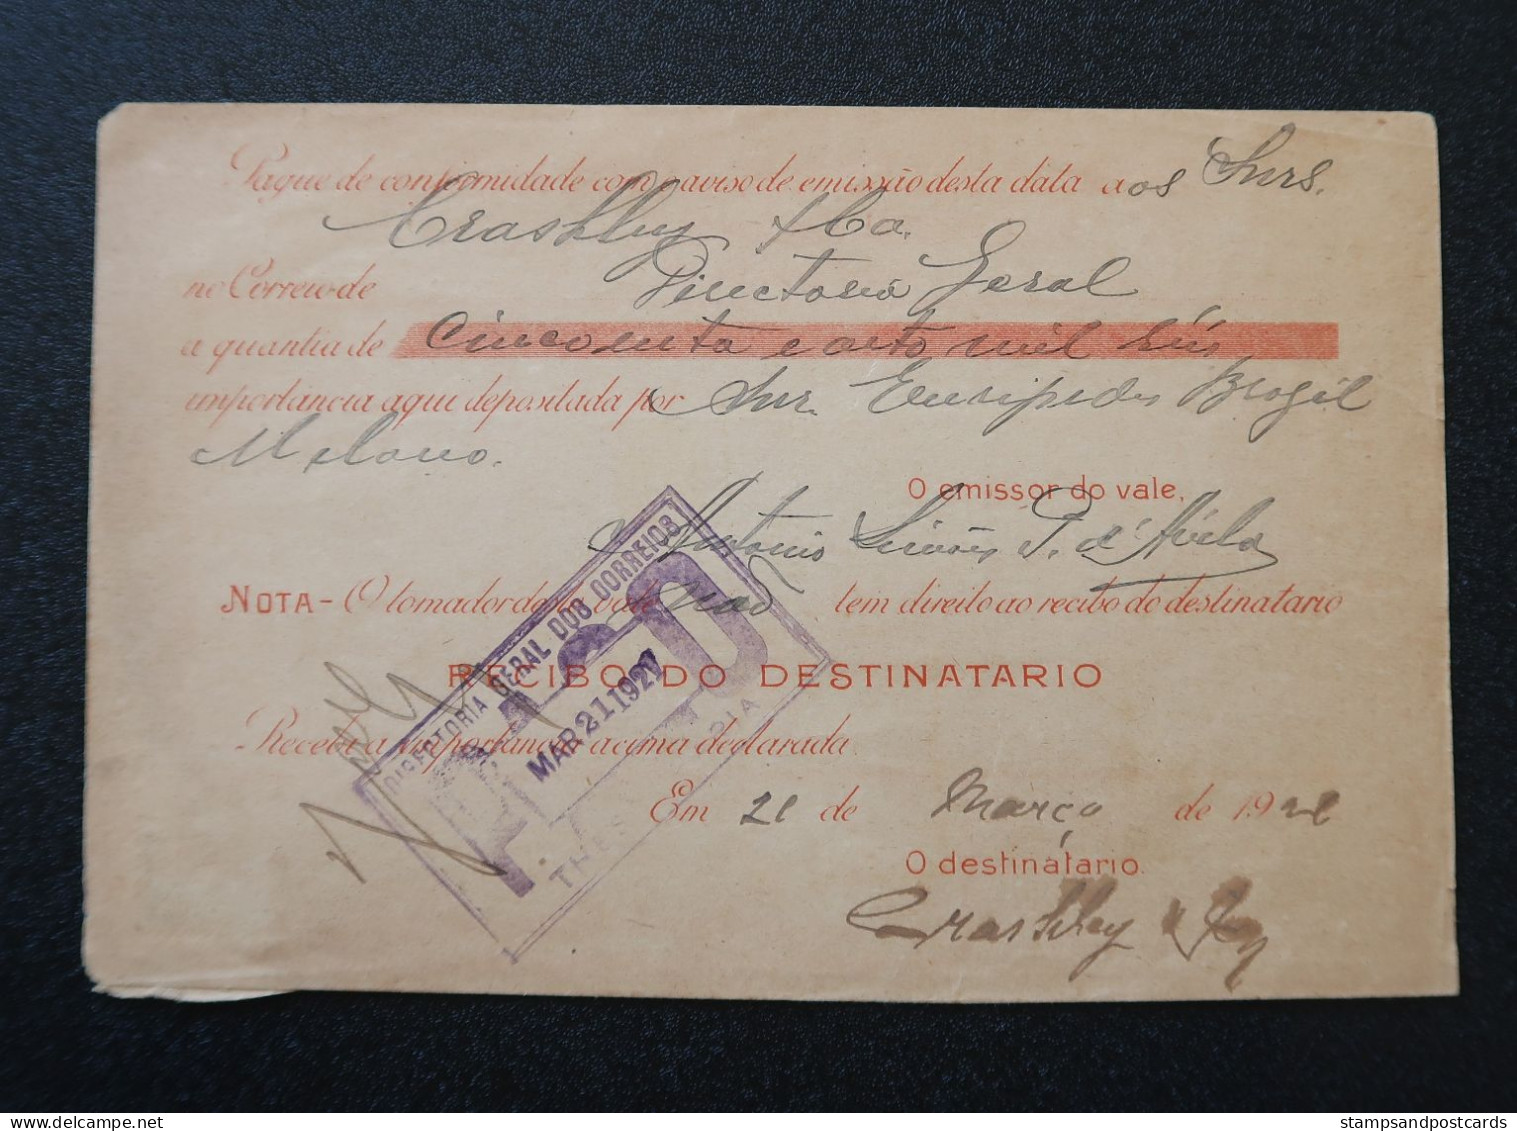 Brèsil Brasil Mandat Vale Postal 1921 Alegrete Rio Grande Do Sul Timbre Fiscal Deposito Brazil Money Order Revenue Stamp - Cartas & Documentos